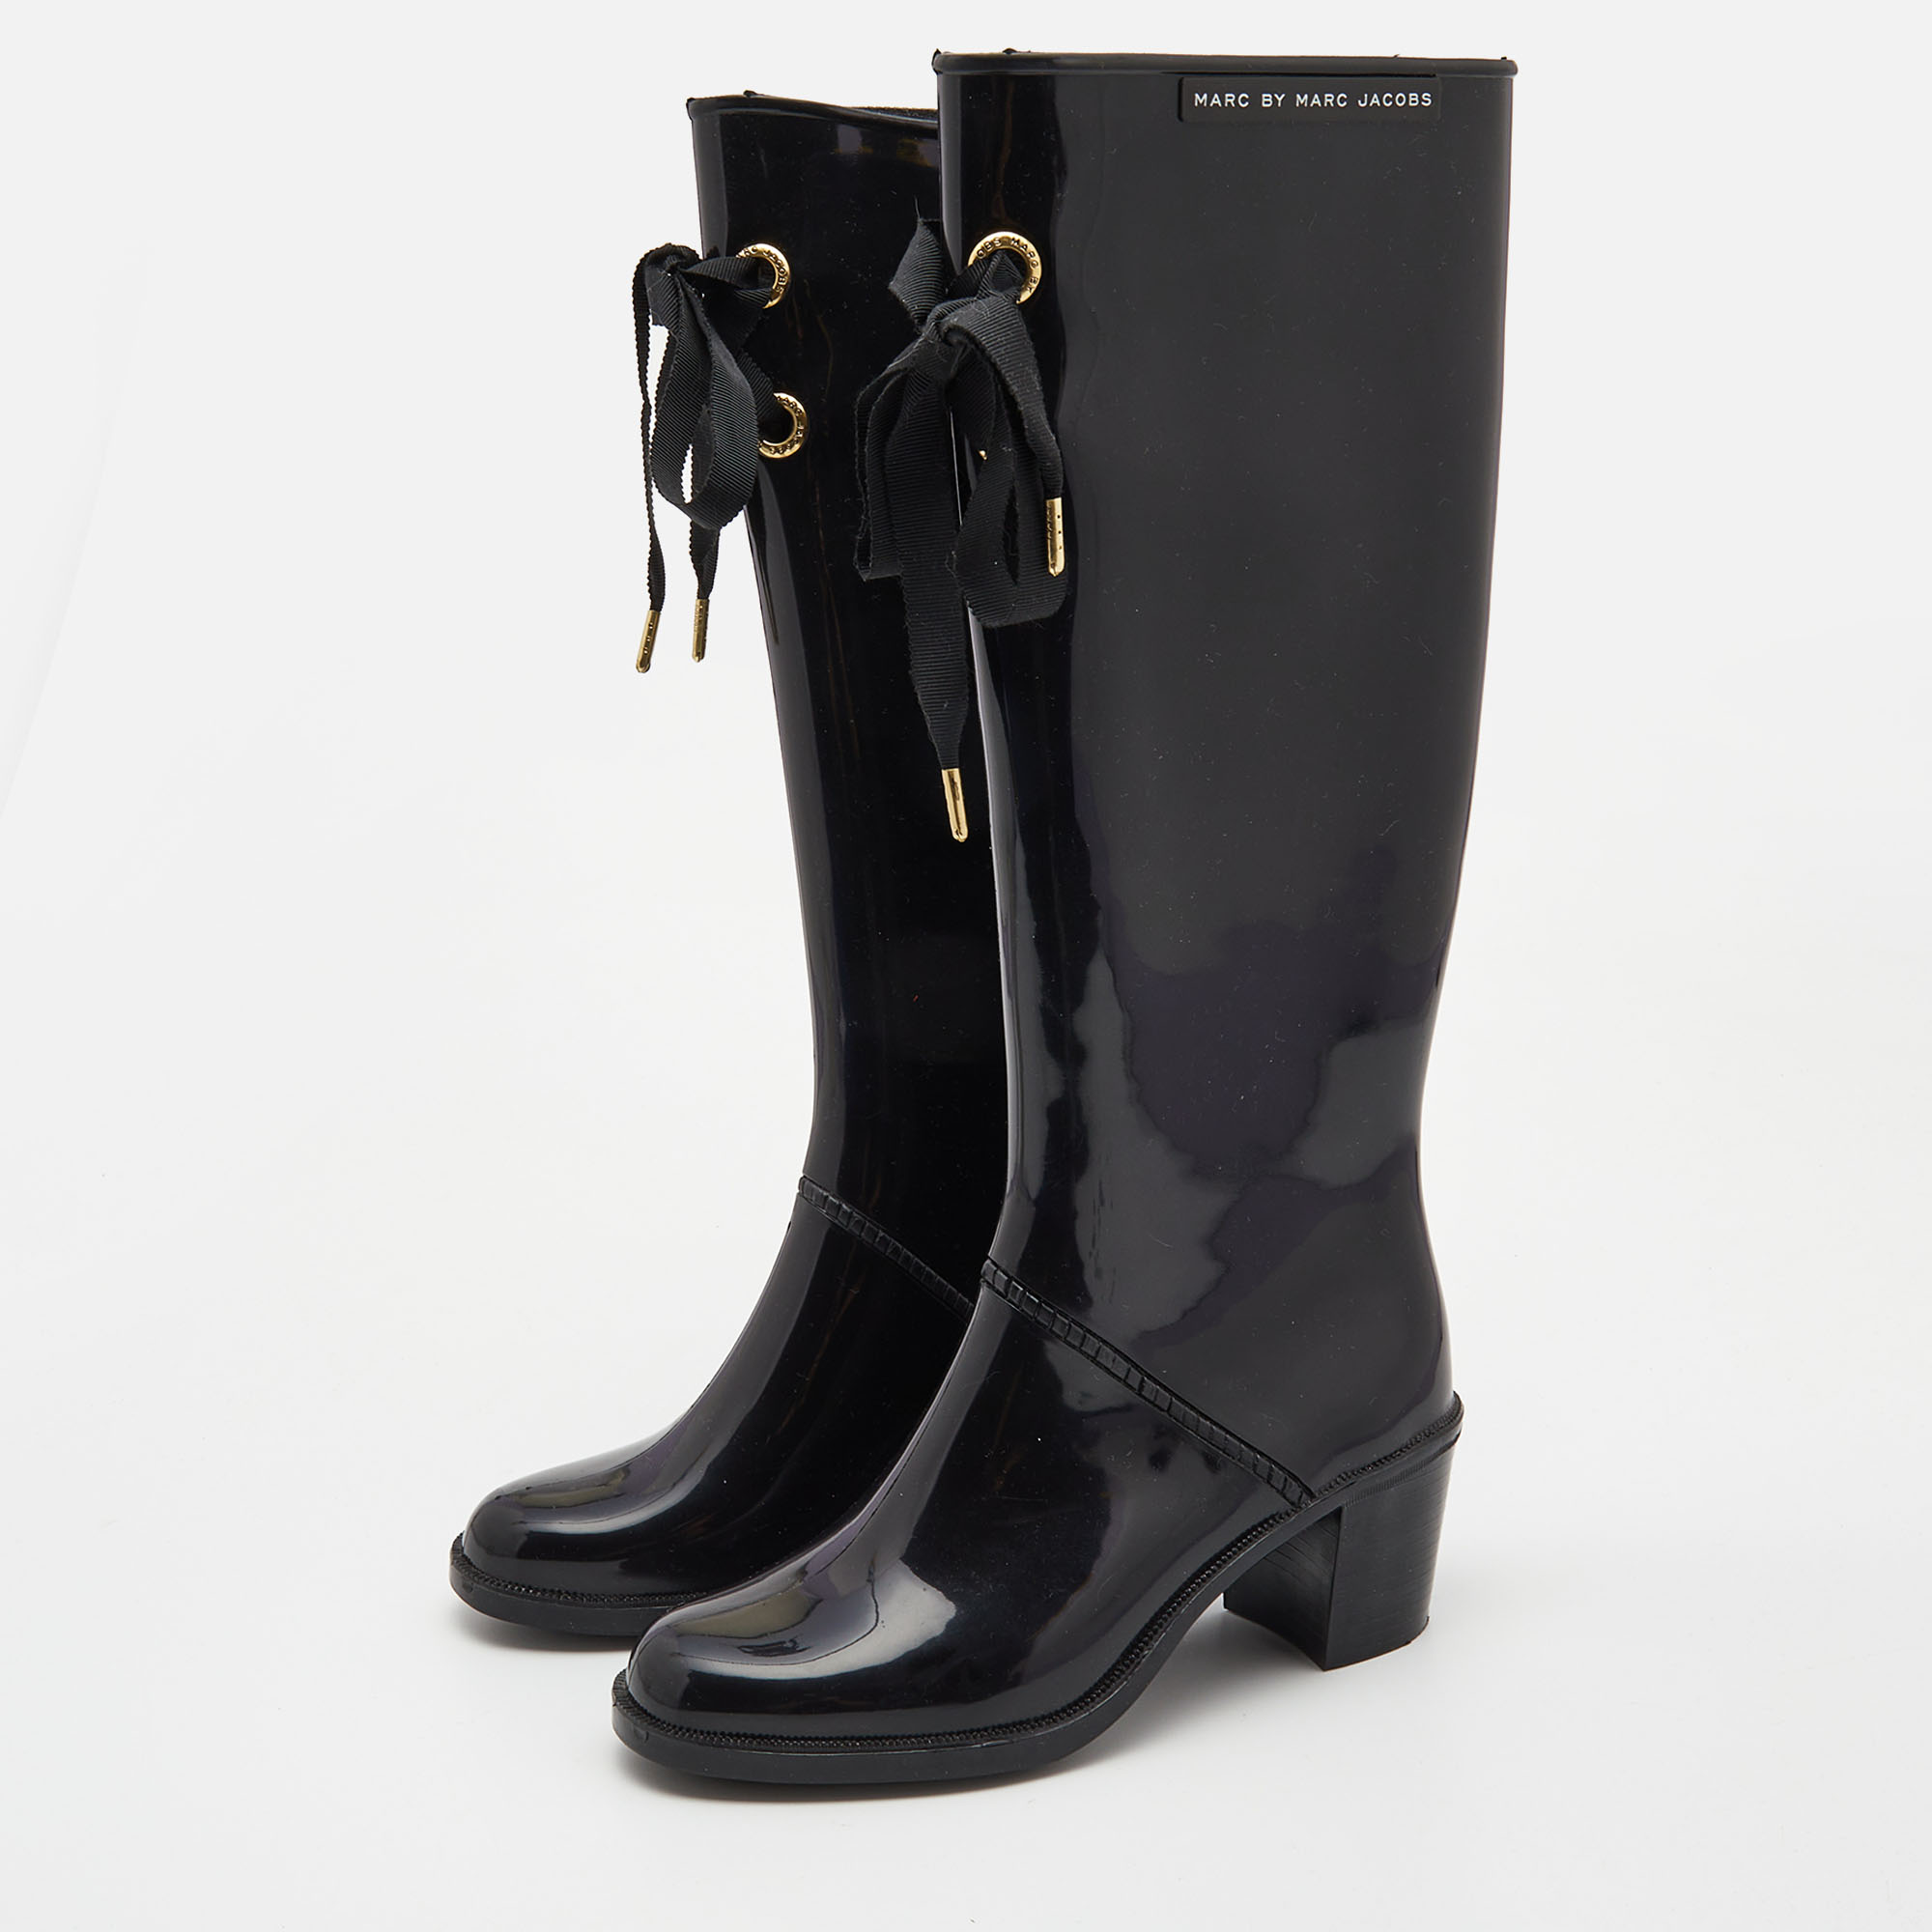 

Marc by Marc Jacobs Black Rubber Rain Boots Size